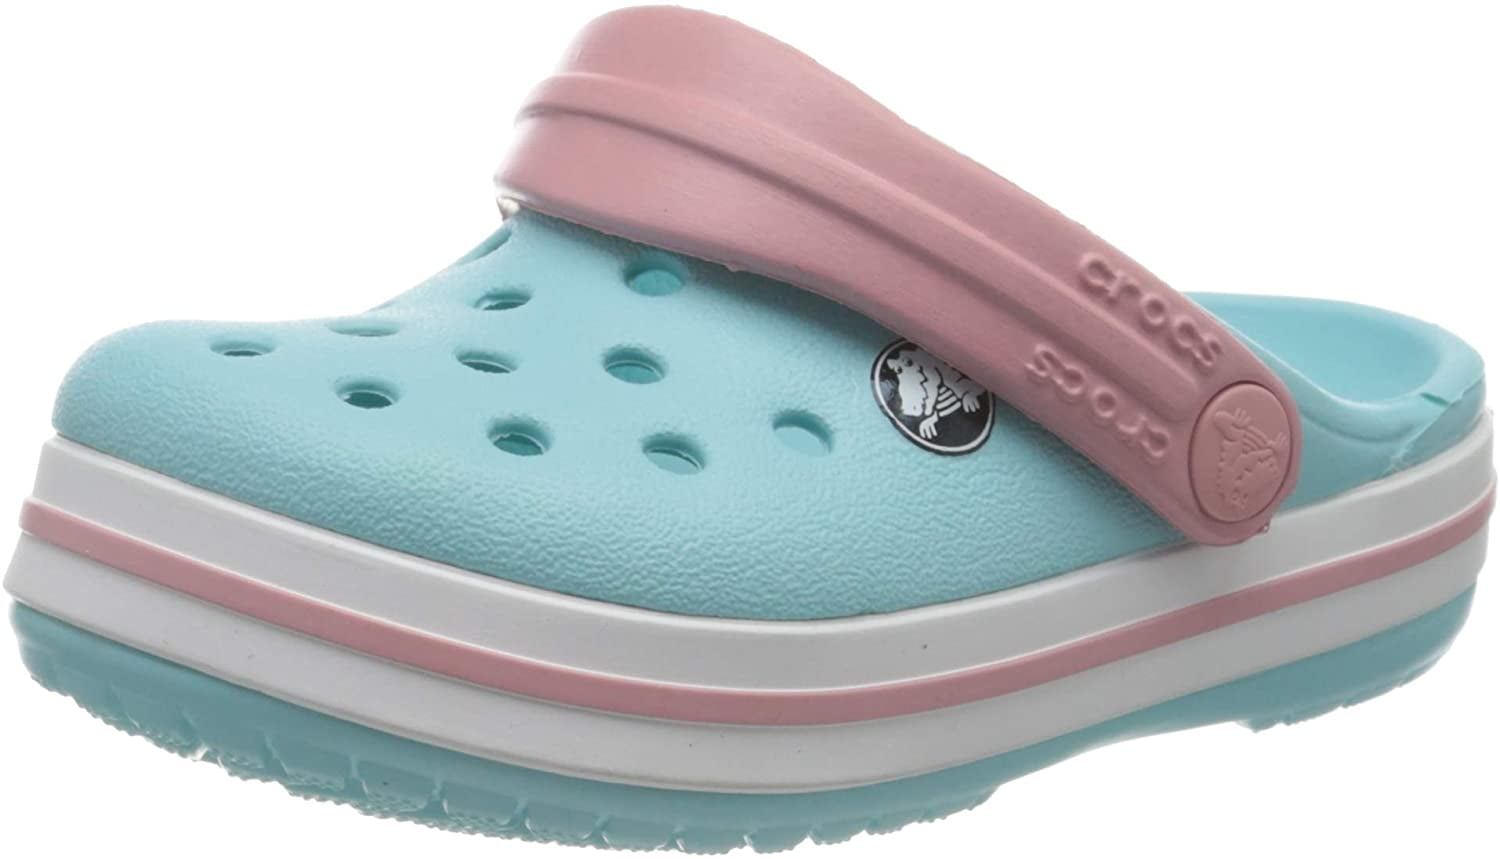 Ice Blue/White Details about   Crocs Crocband Kids Clogs 